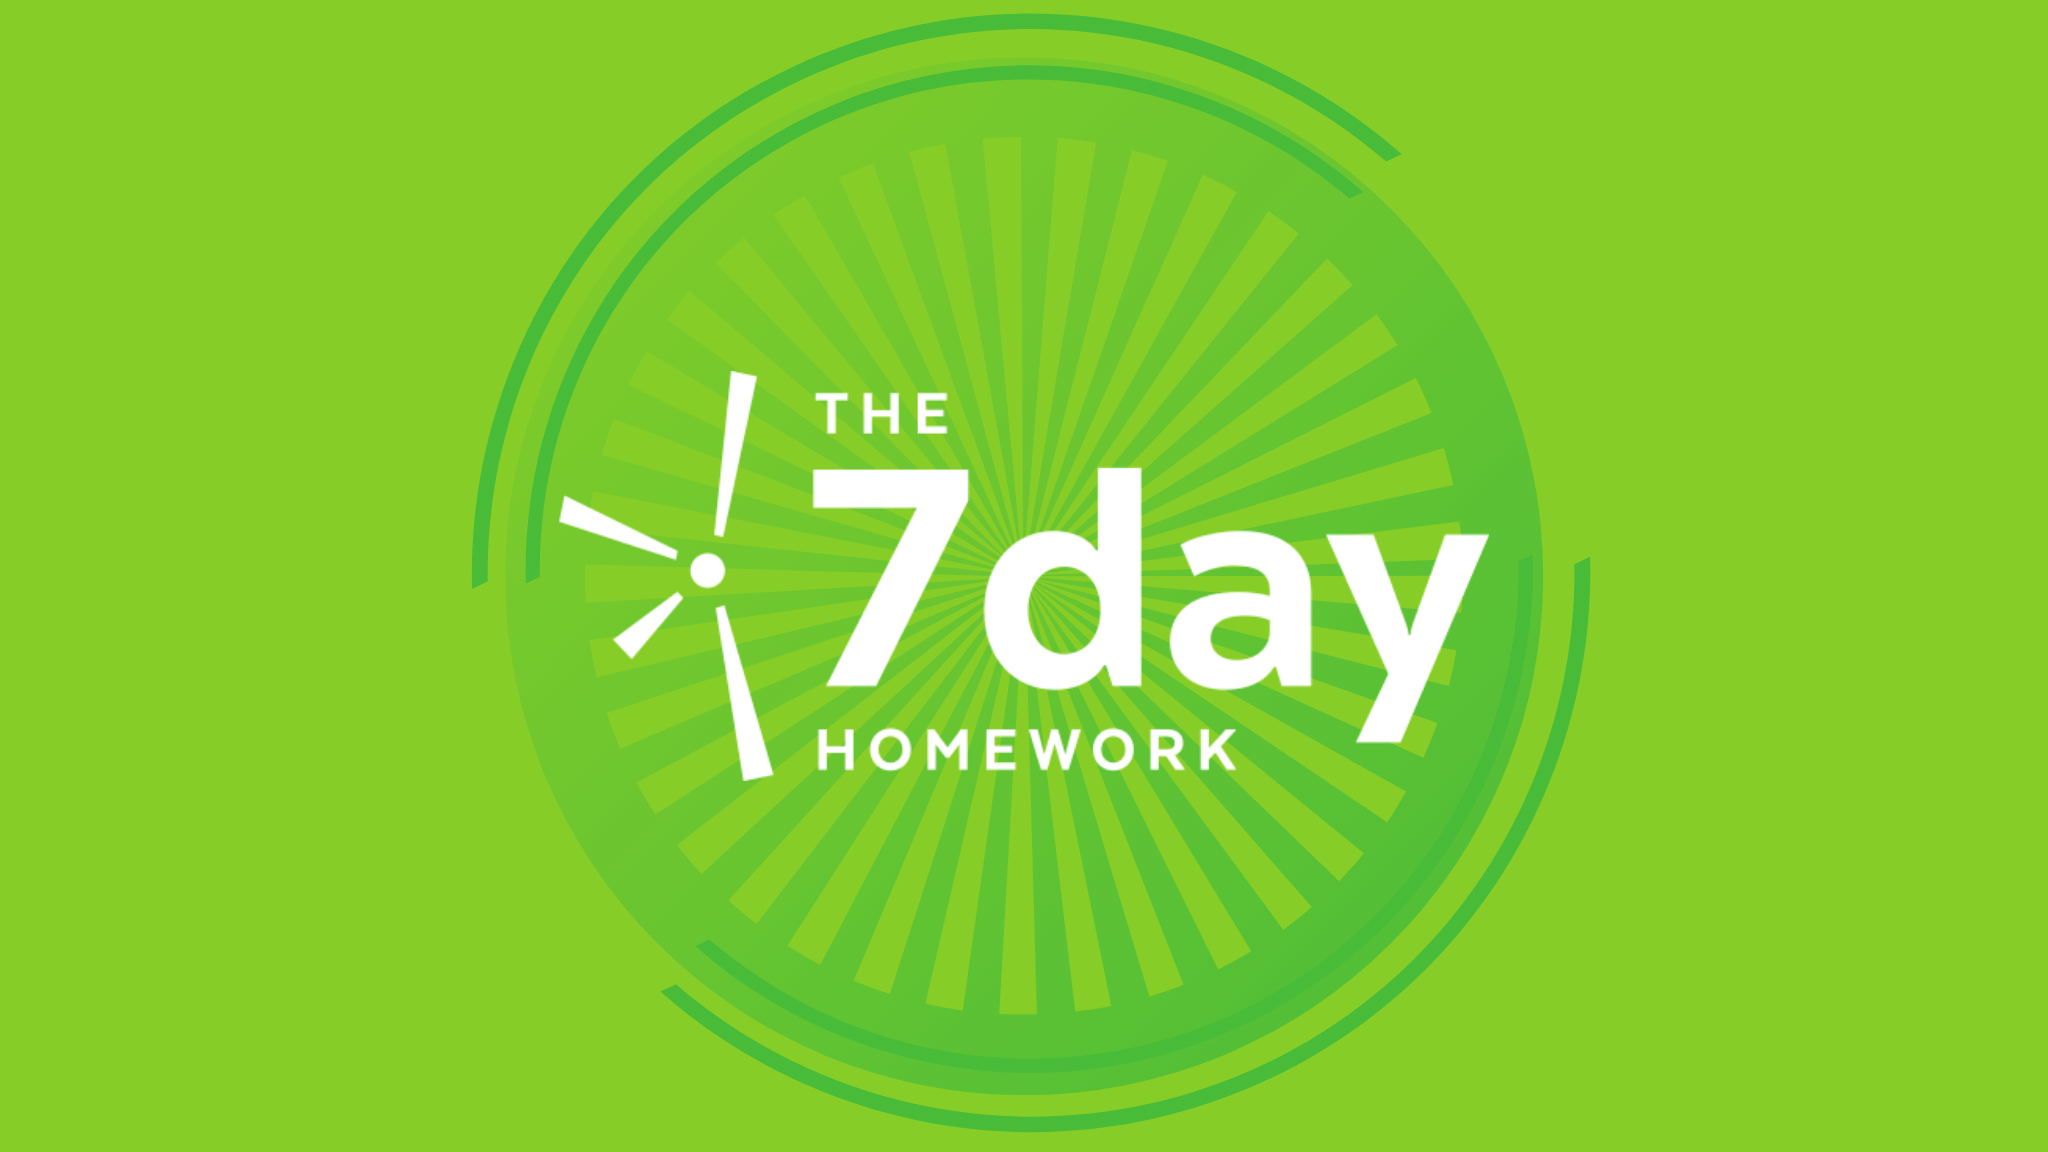 The 7 Day Homework